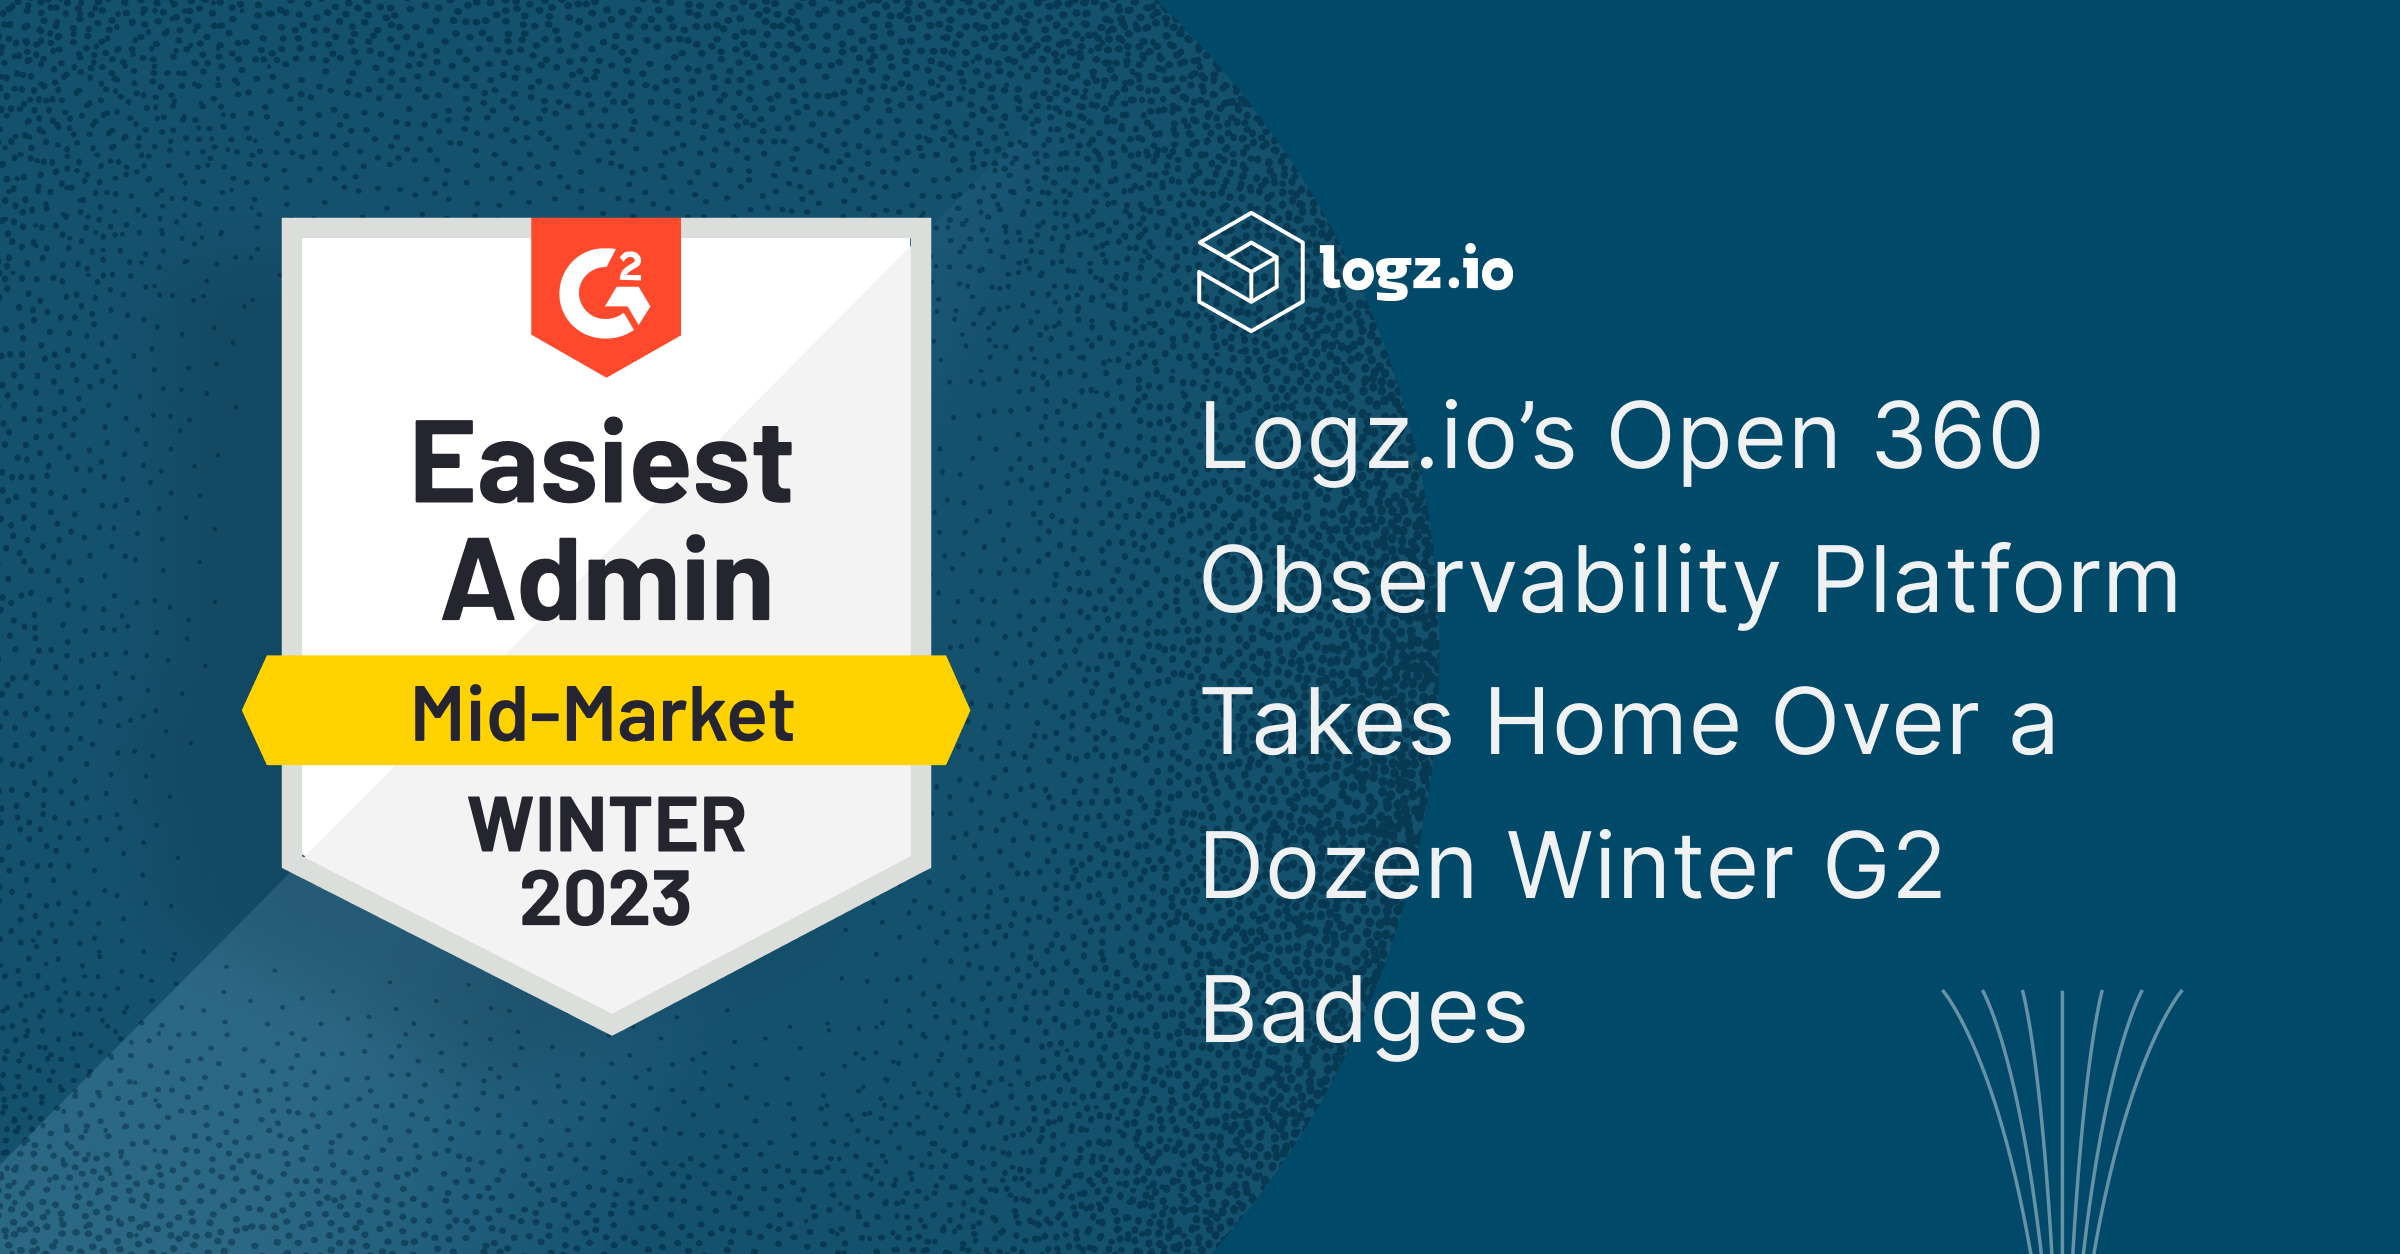 Logz.io’s Open 360 Observability Platform Takes Home Over a Dozen Winter G2 Badges